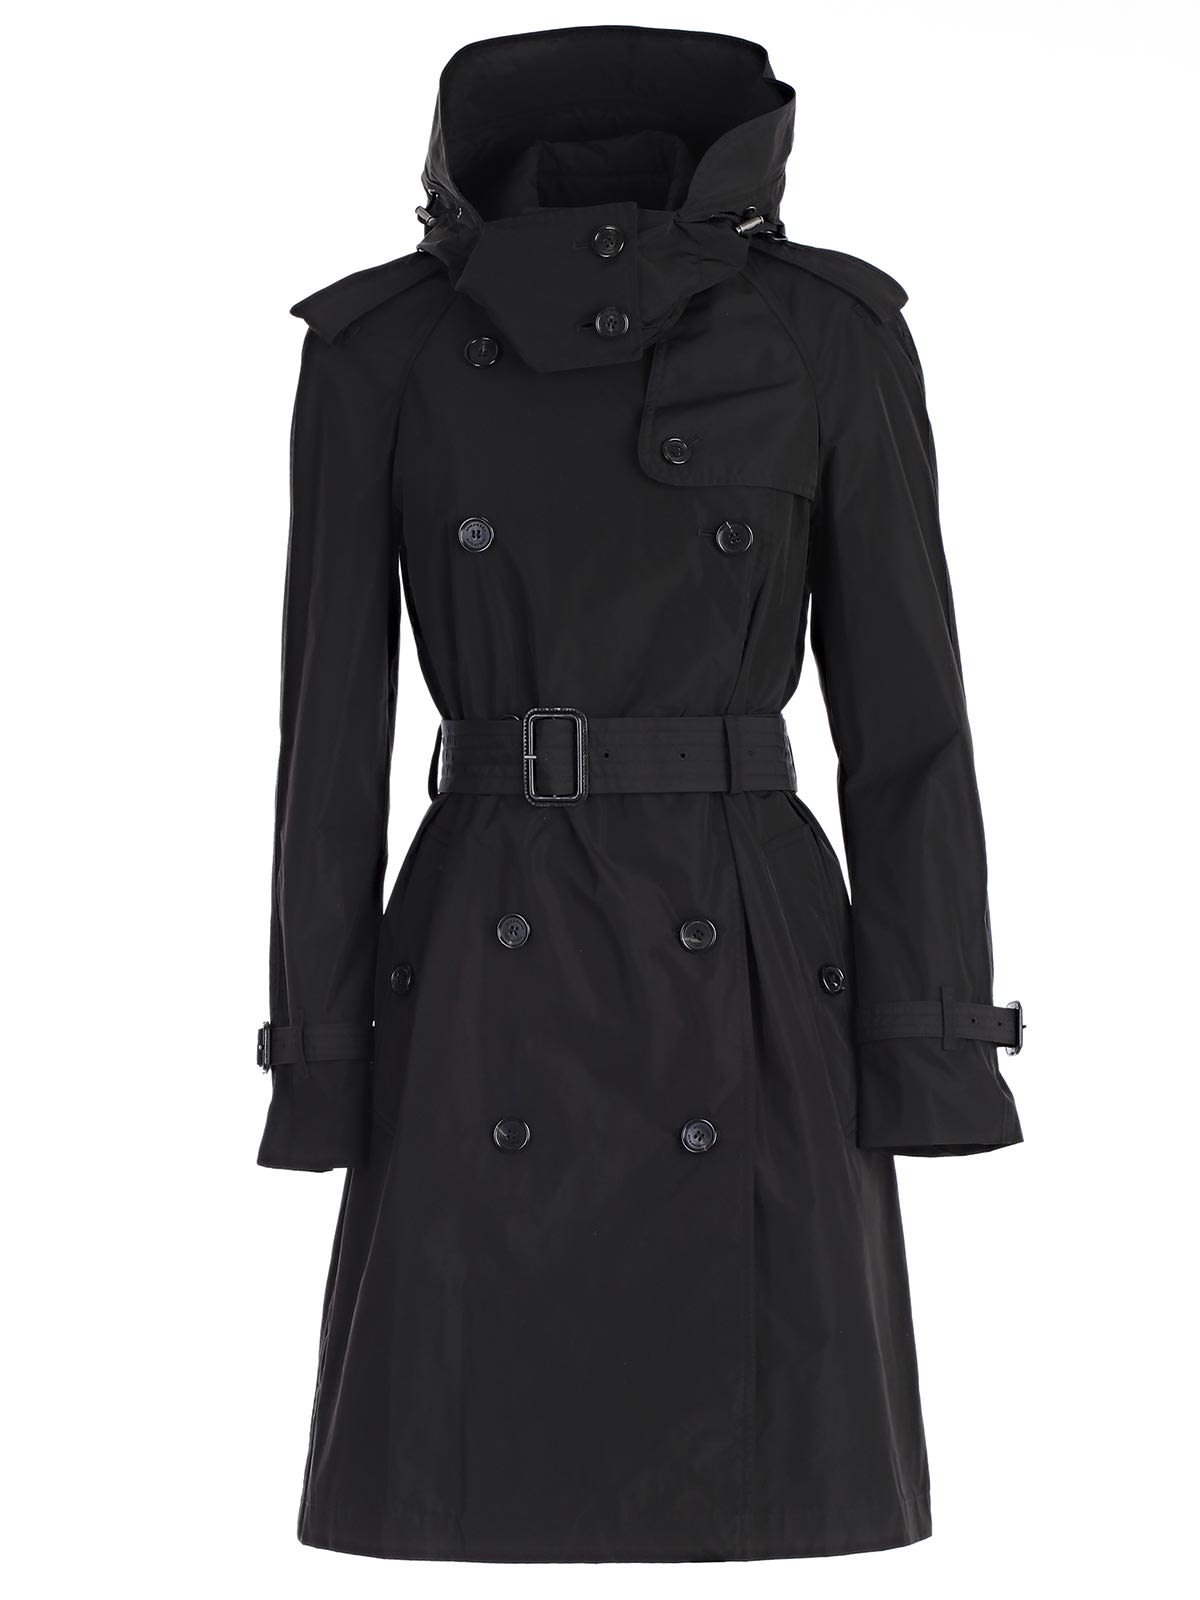 Burberry - Burberry Raincoat - Black, Women's Raincoats | Italist